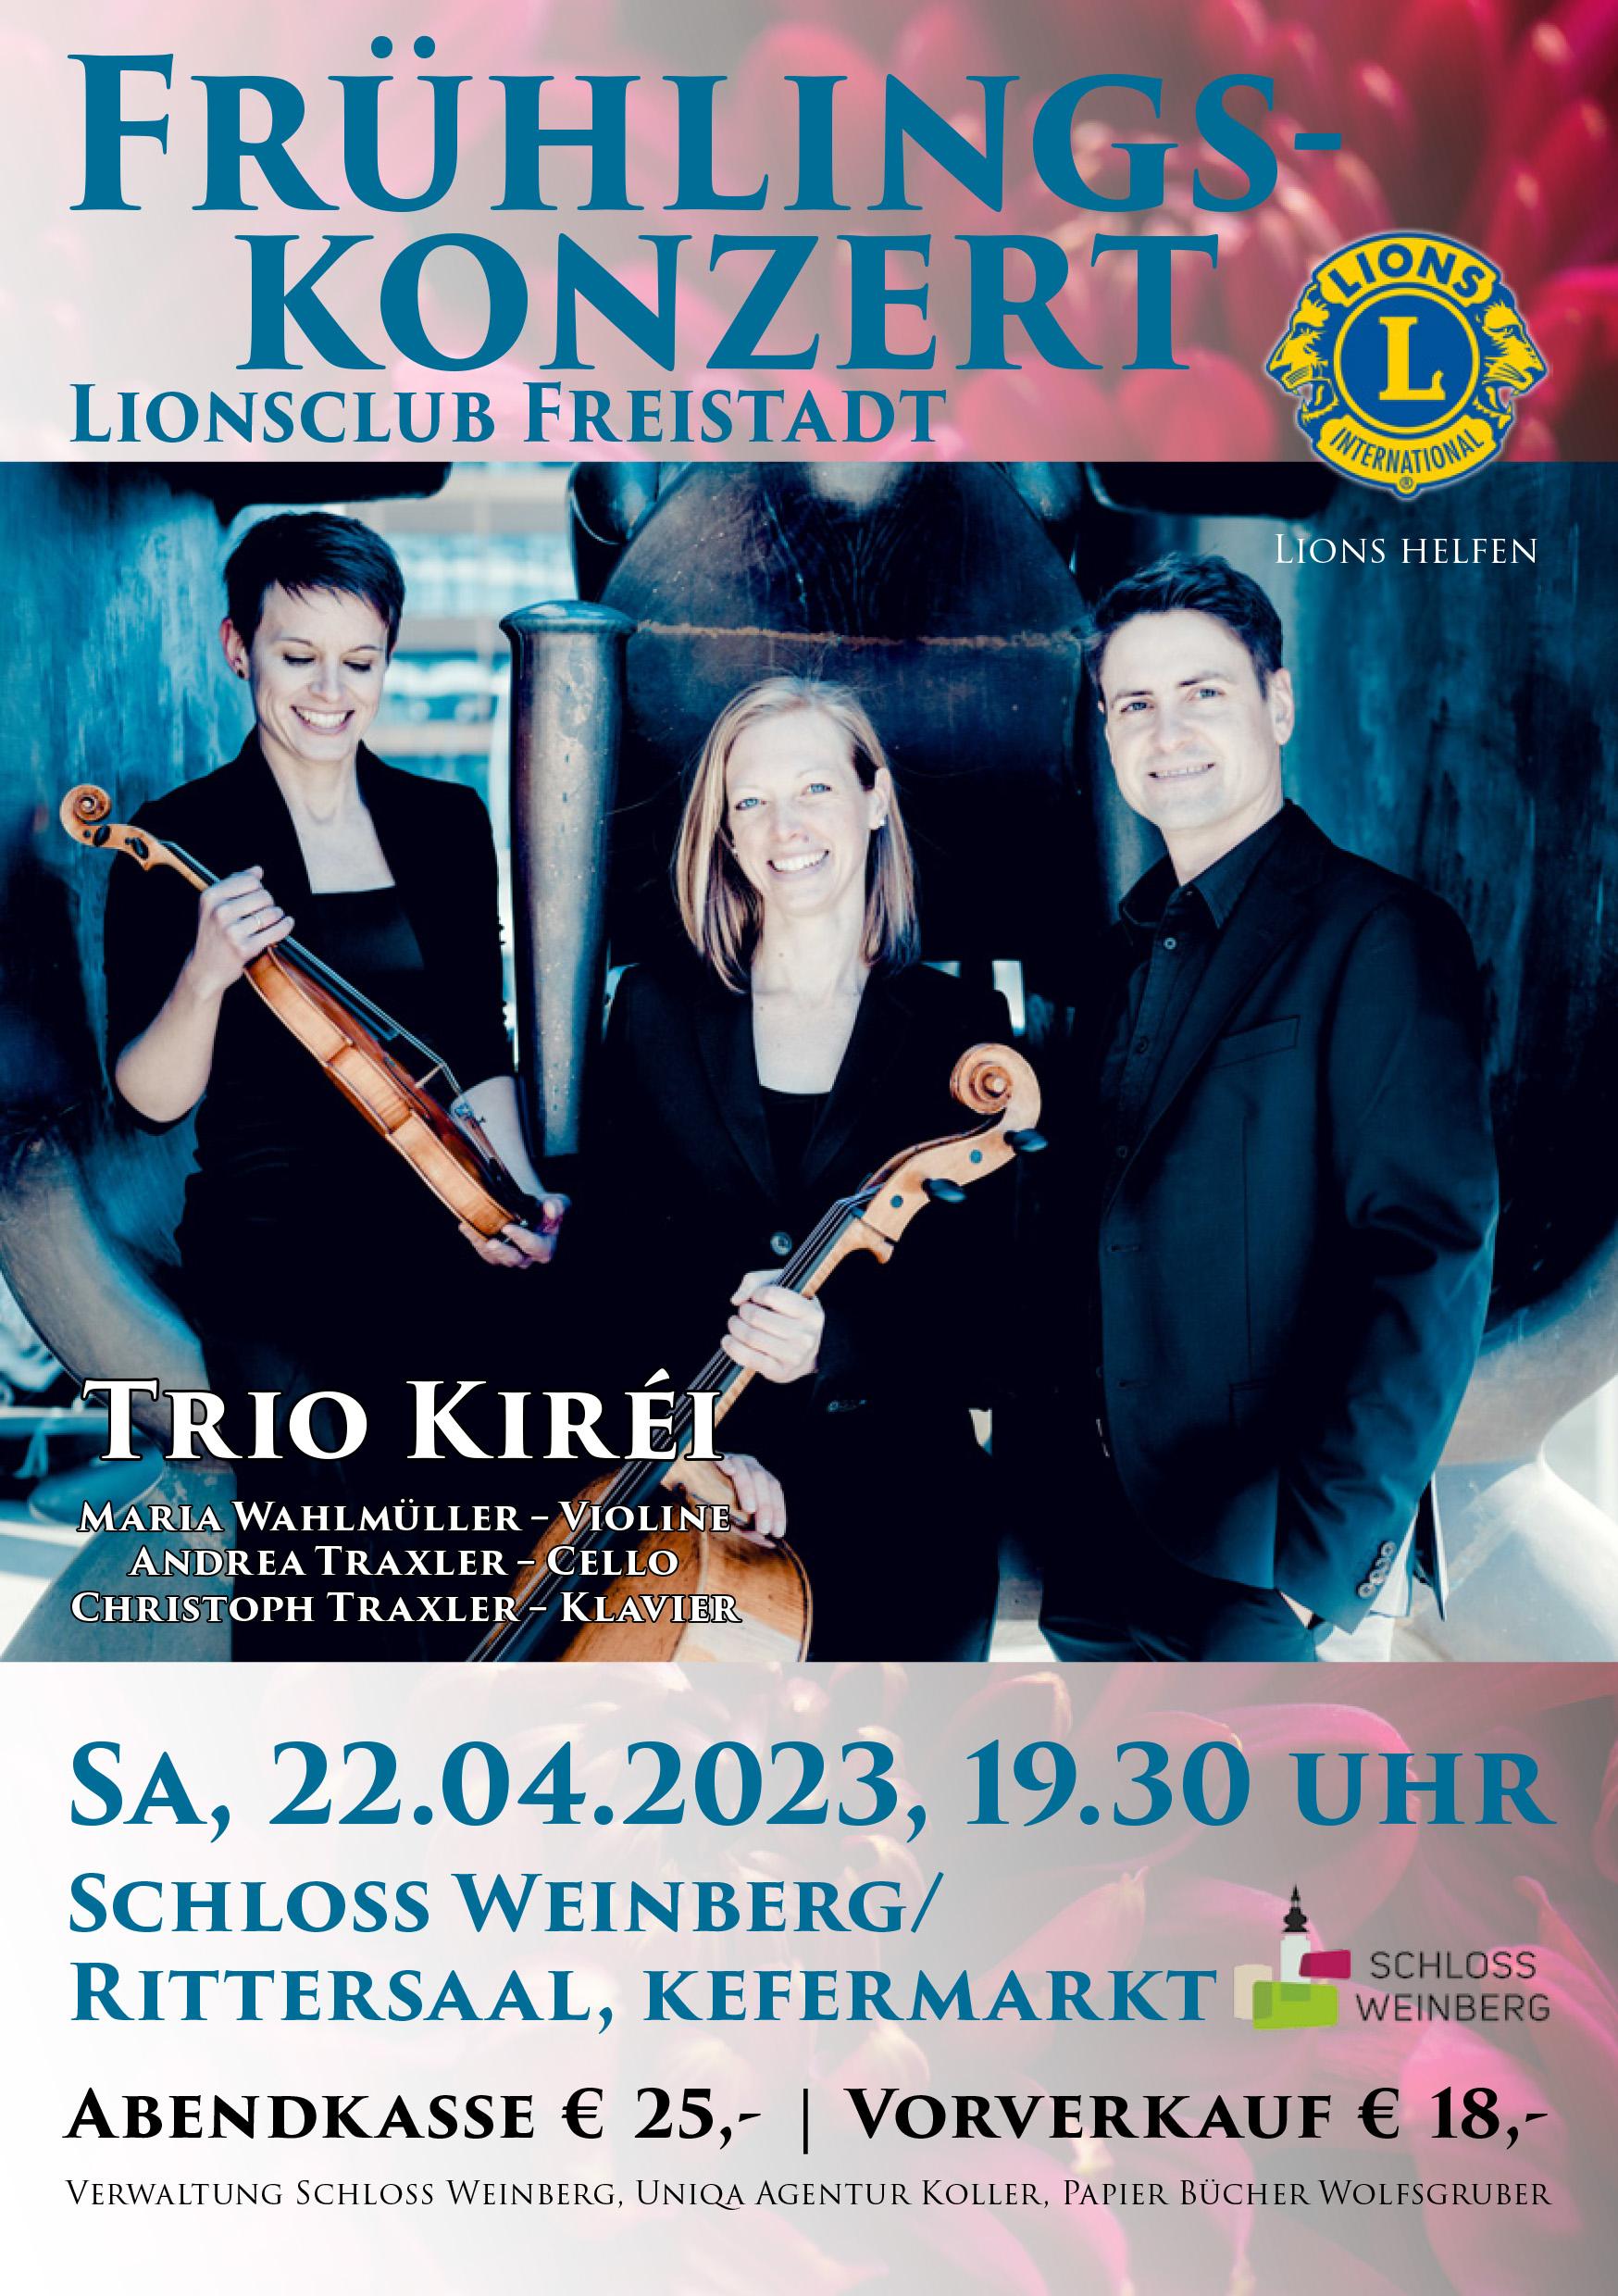 Plakat des Fruehlingskonzerts des Lionsclub Freistadt